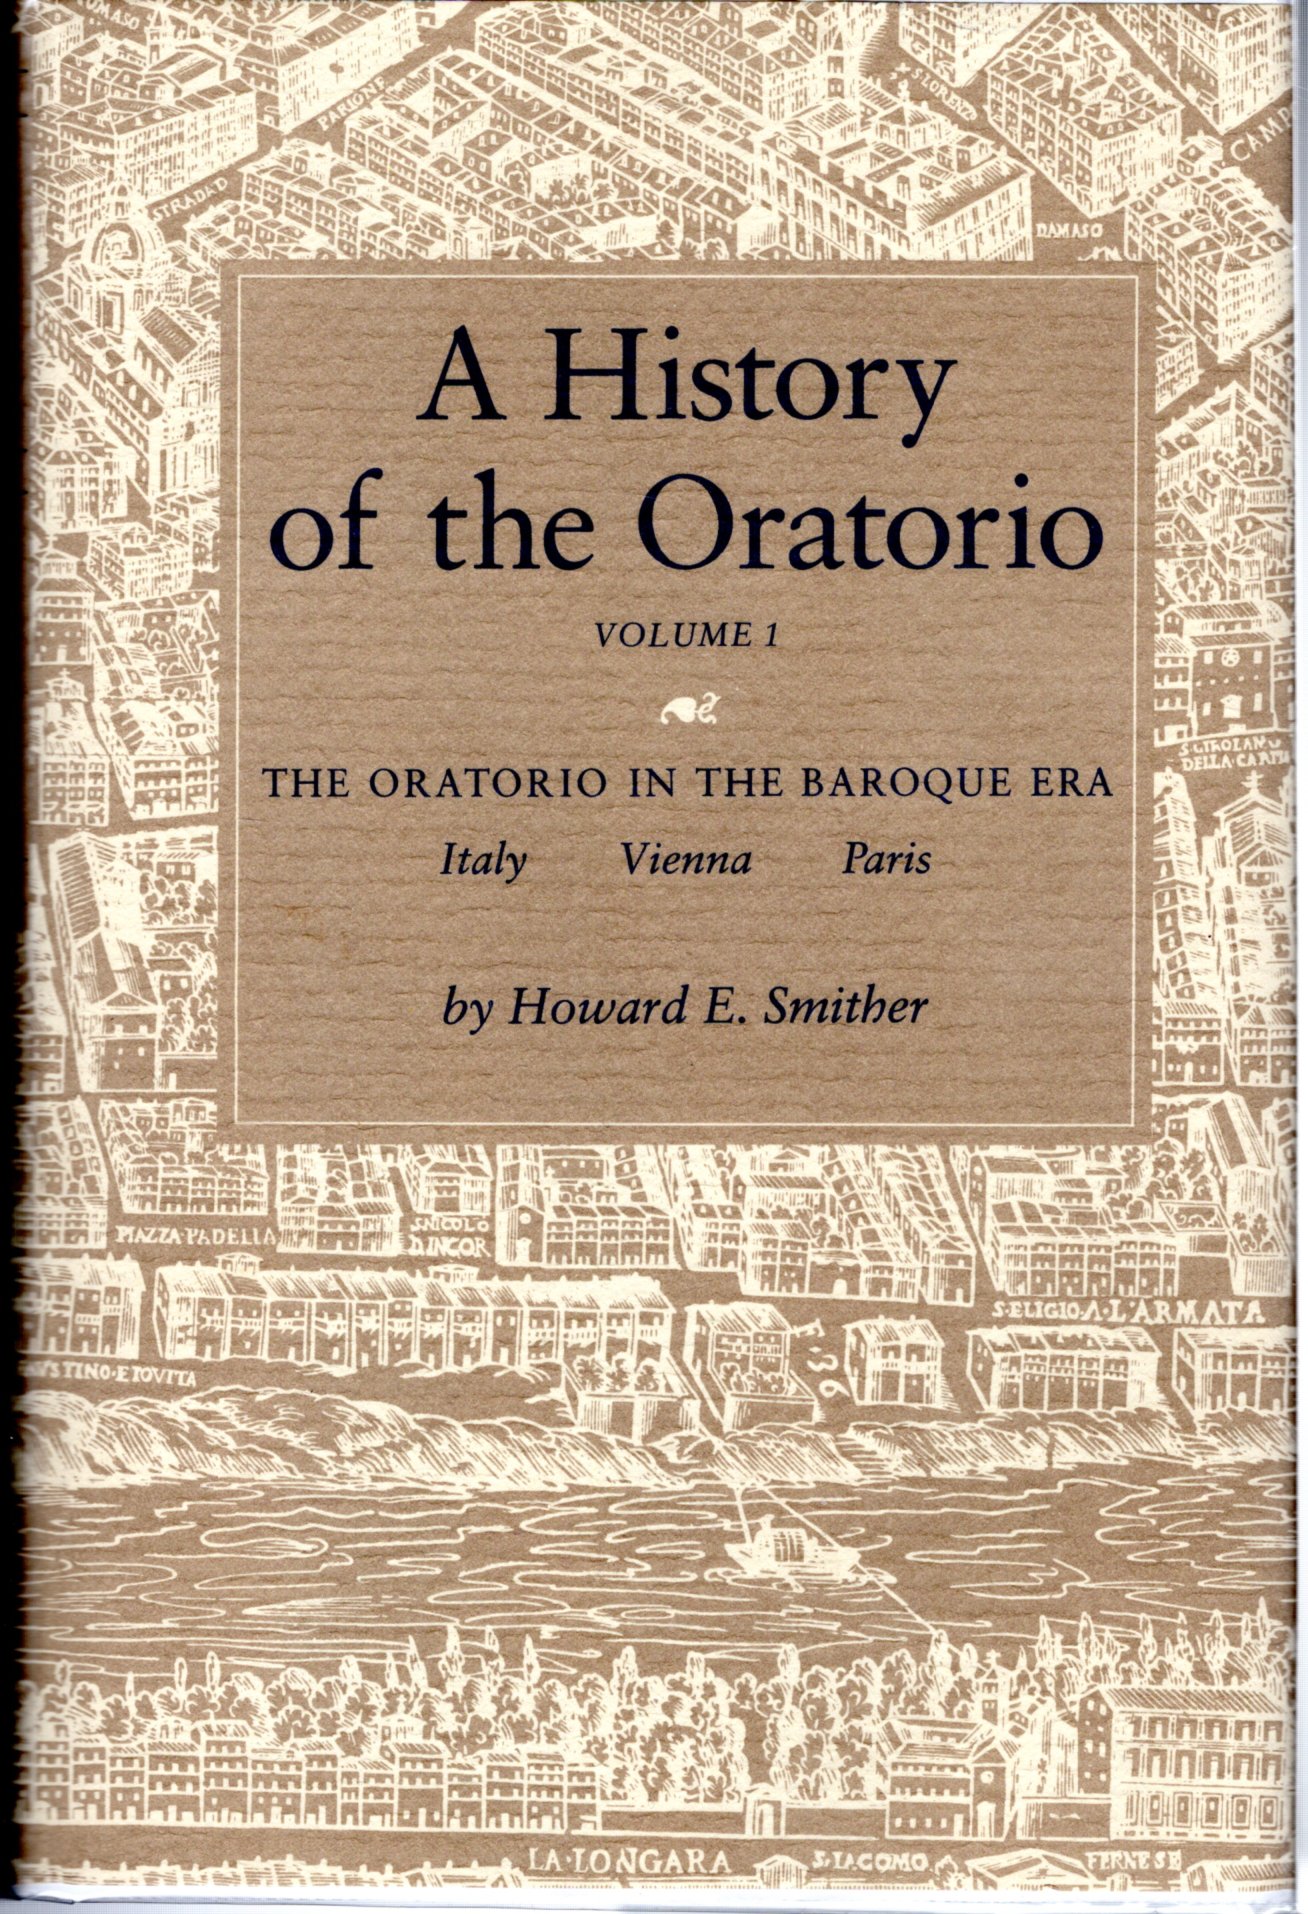 A History of the Oratorio: Vol.ume 1 (One): The Oratorio in the Baroque Era: Italy, Vienna, Paris - Smither, Howard E. (Howard Elbert)